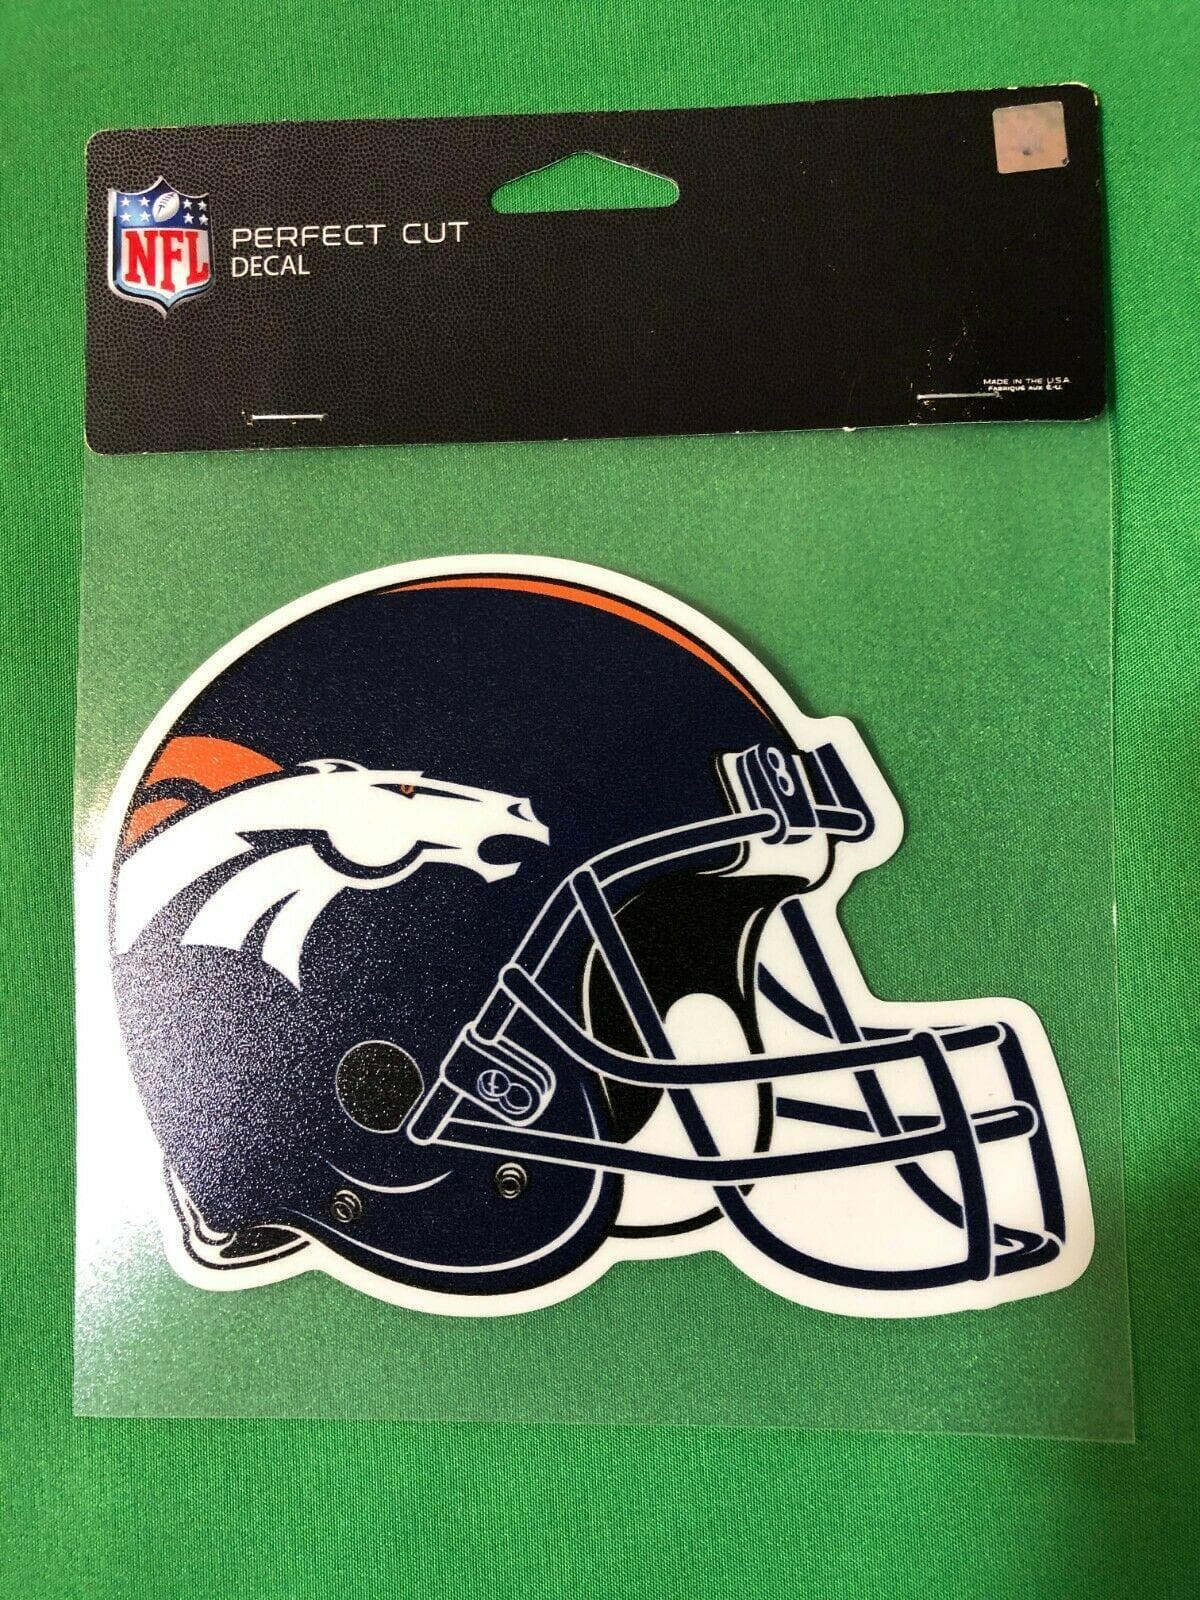 NFL Denver Broncos Perfect Cut Decal 6" x 4-1/2" NWT